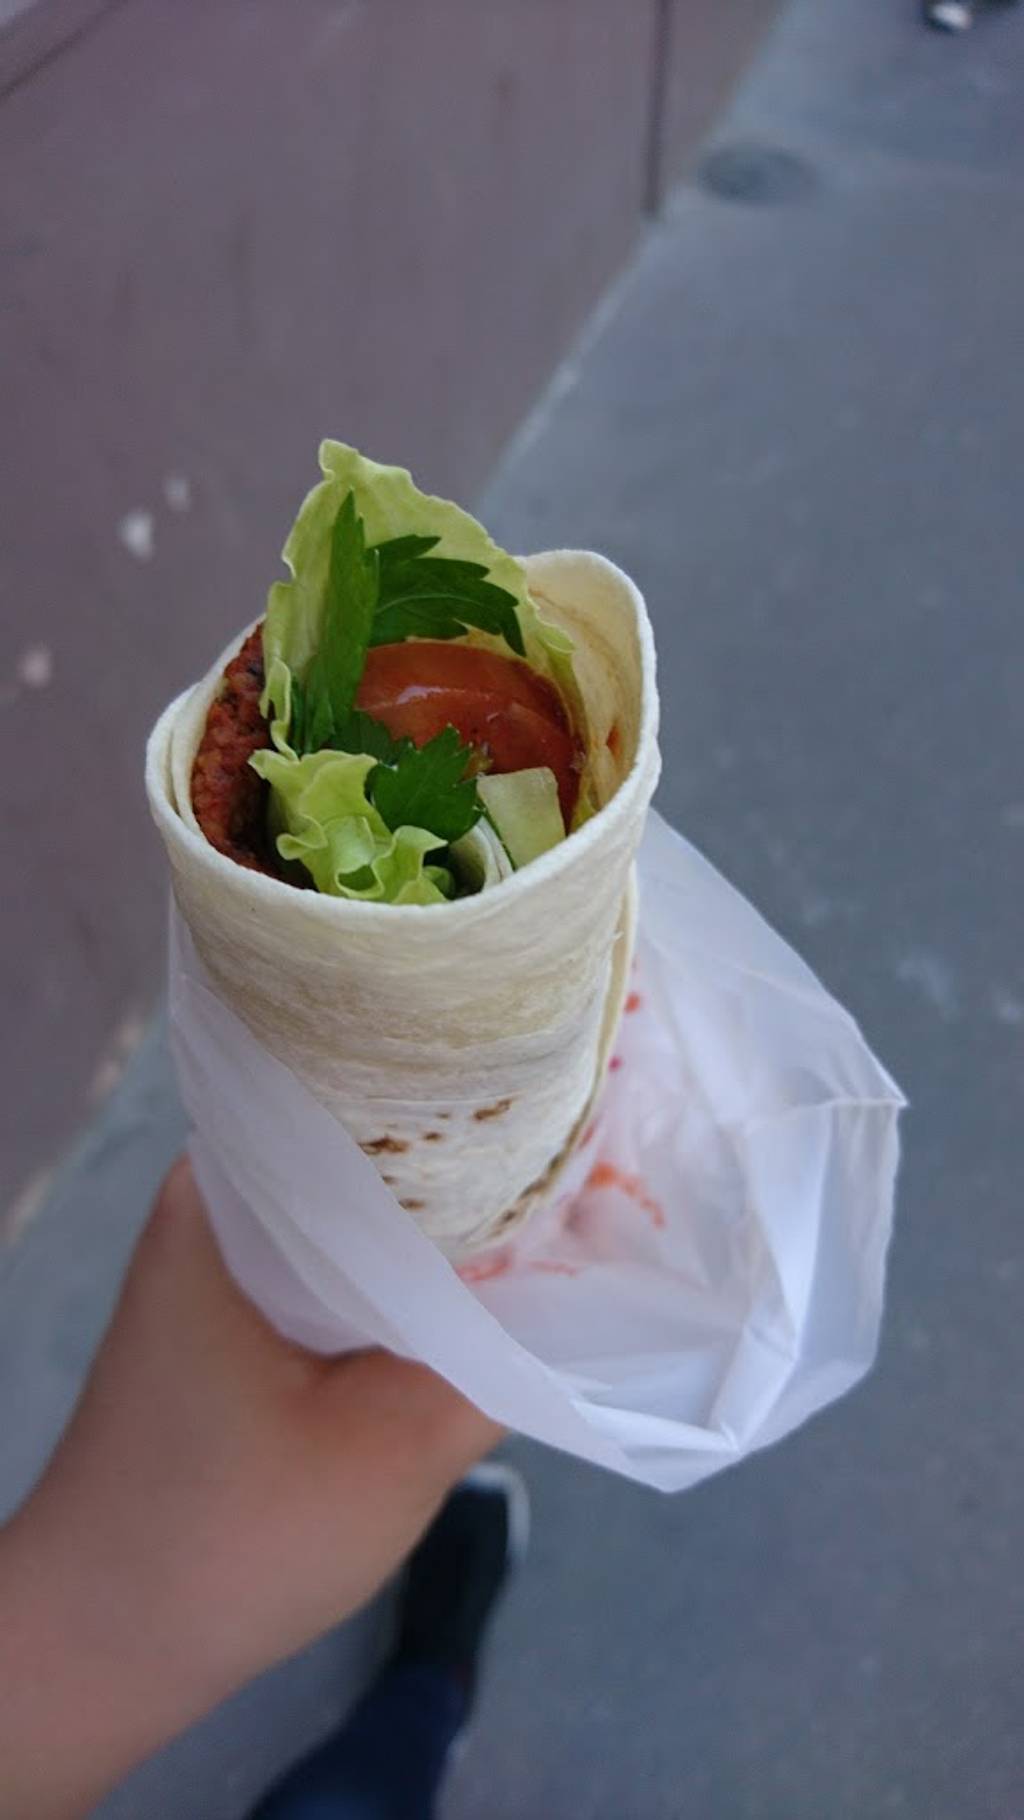 Cigkoftem Strasbourg - Food Cuisine Dish Ingredient Sandwich wrap